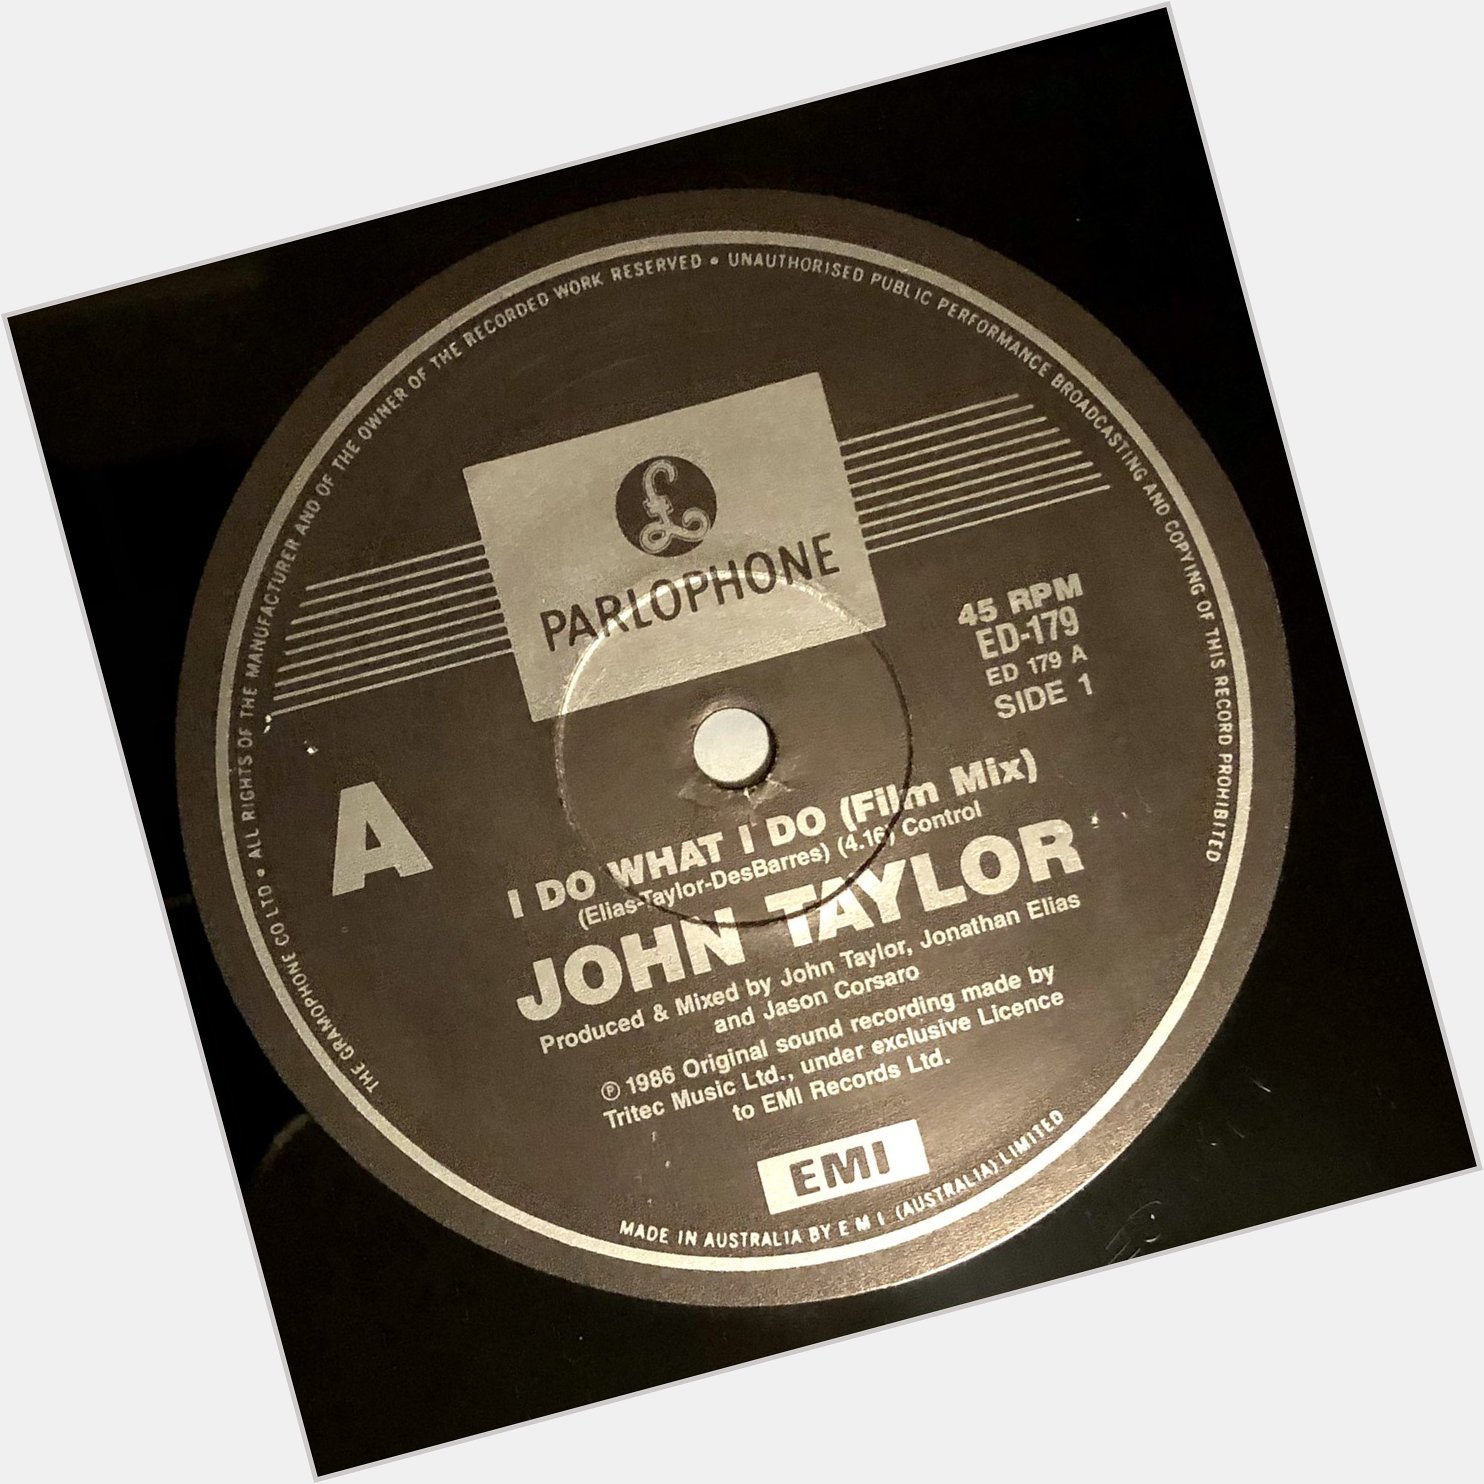 Happy 61st Birthday to John Taylor of 